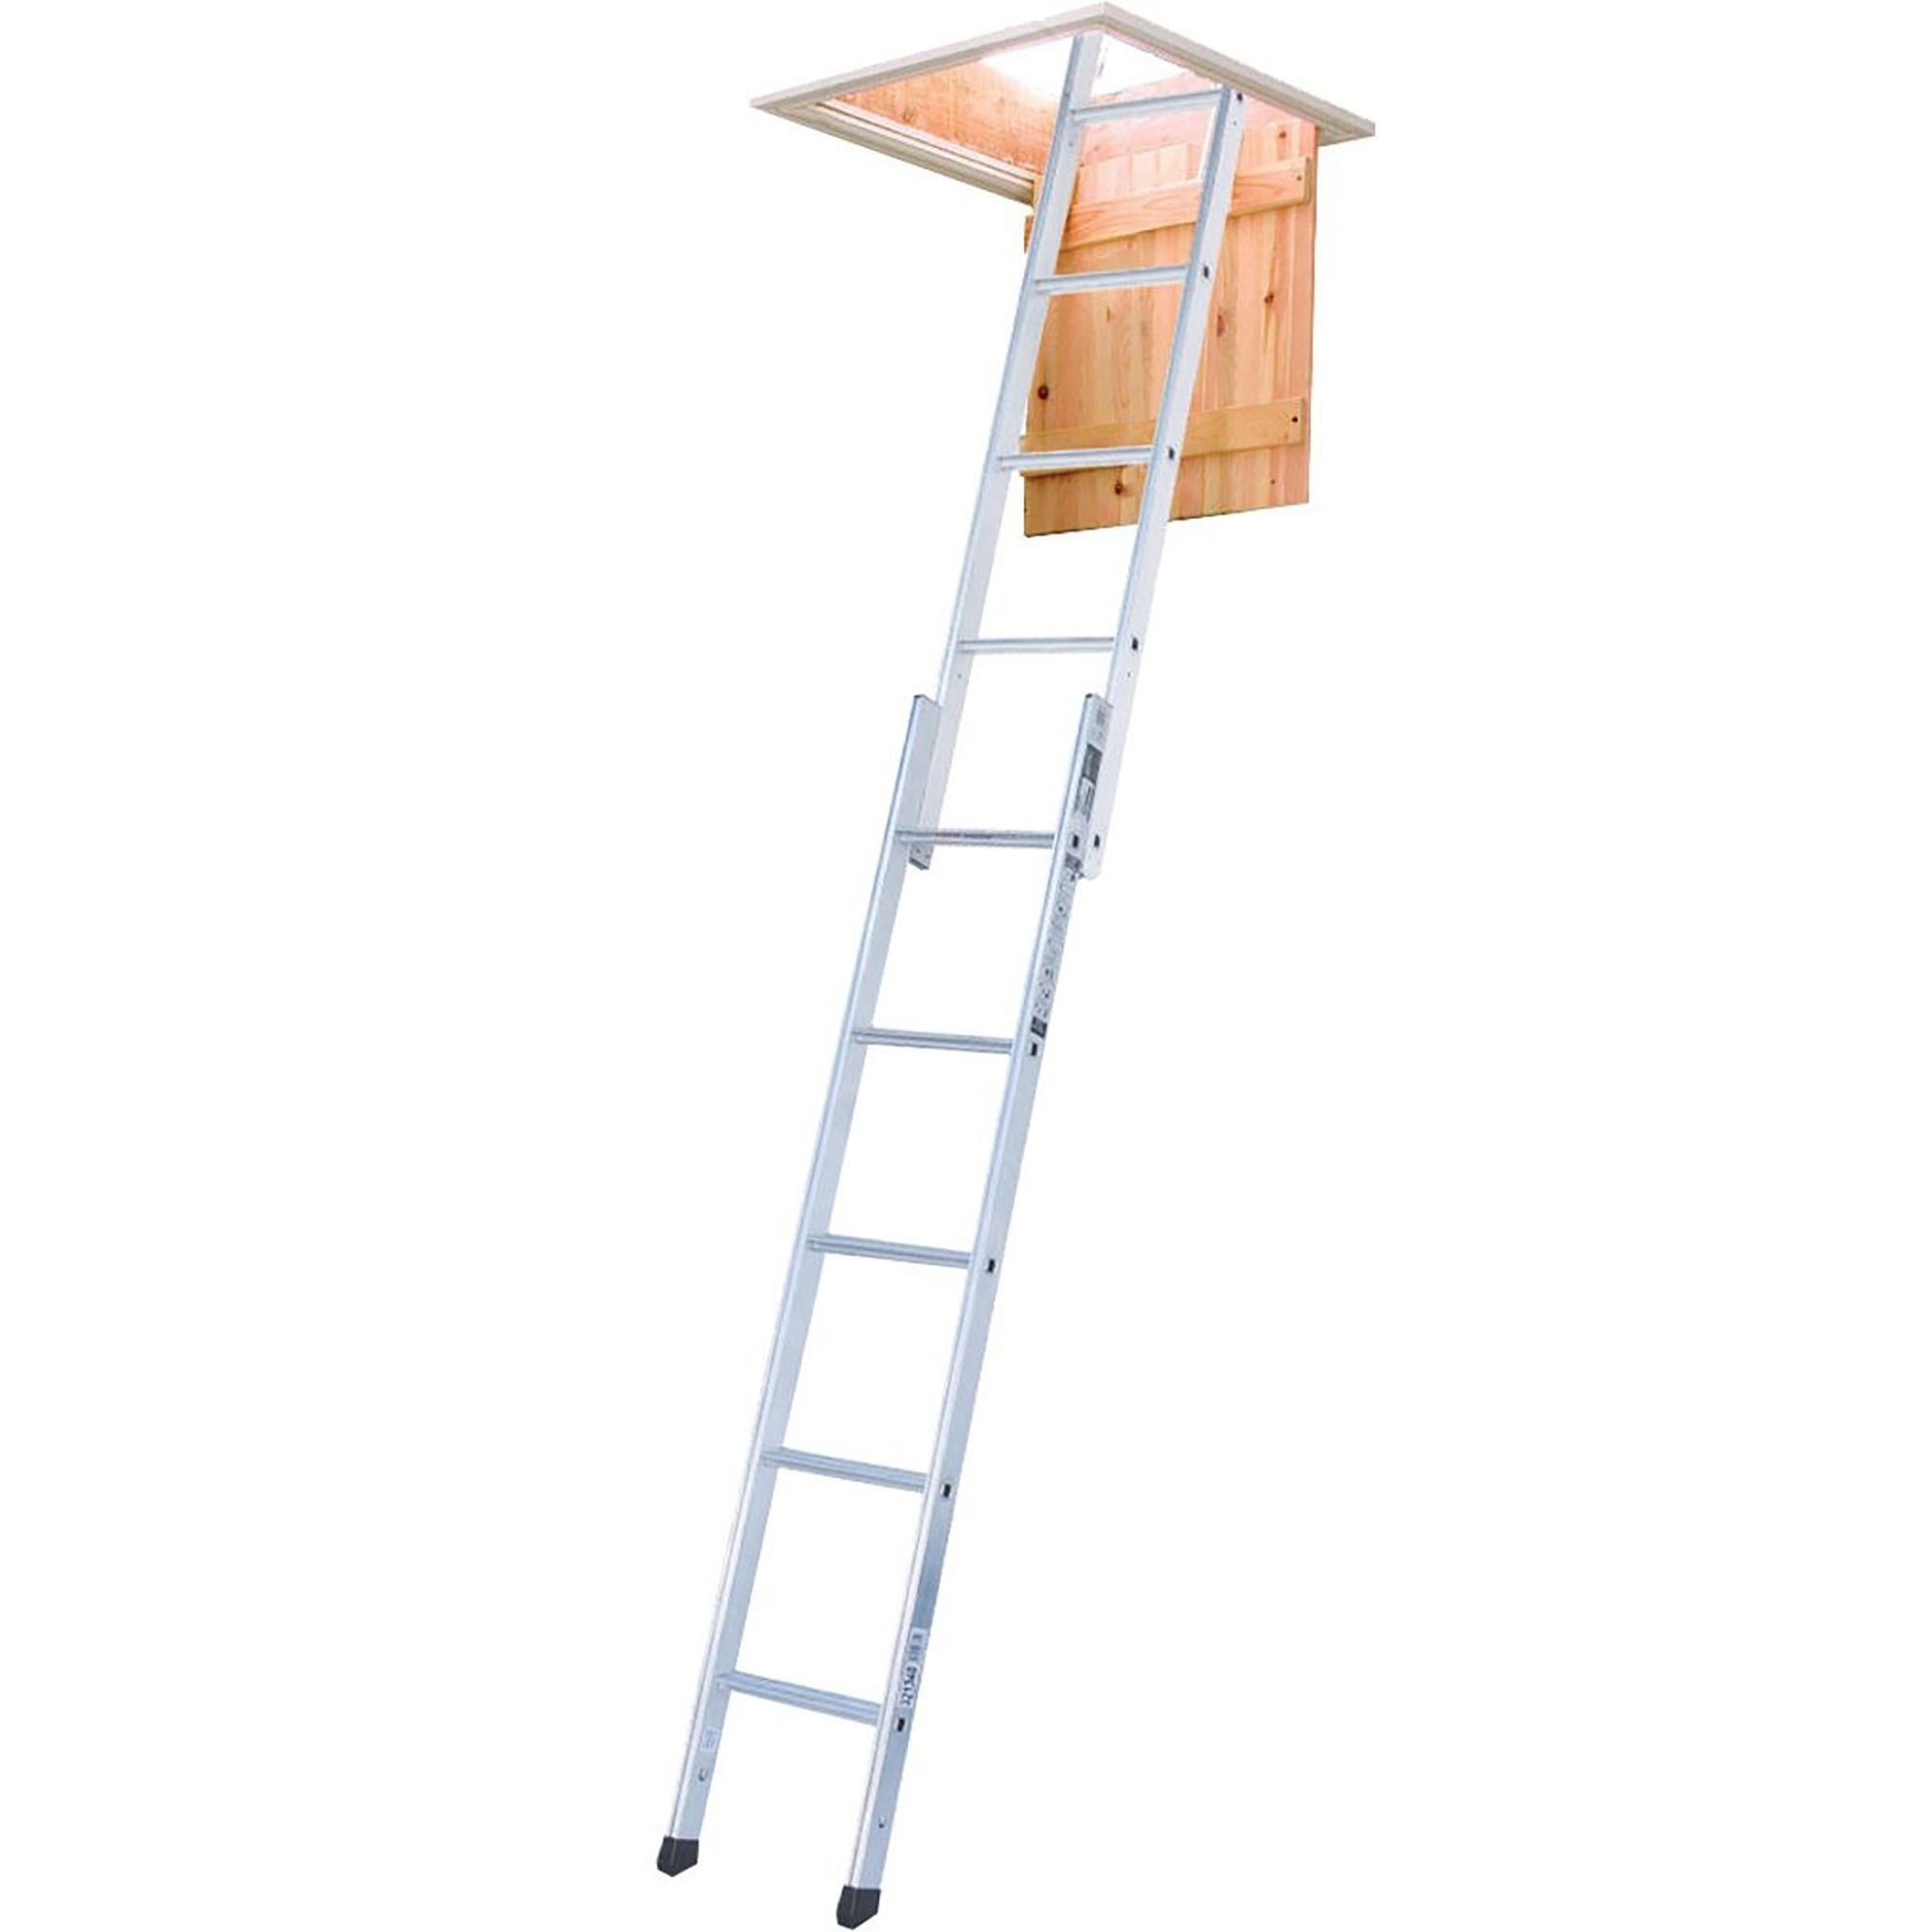 Youngman 3 Section Easiway Aluminium Loft Ladder 2.3-3m - 313340